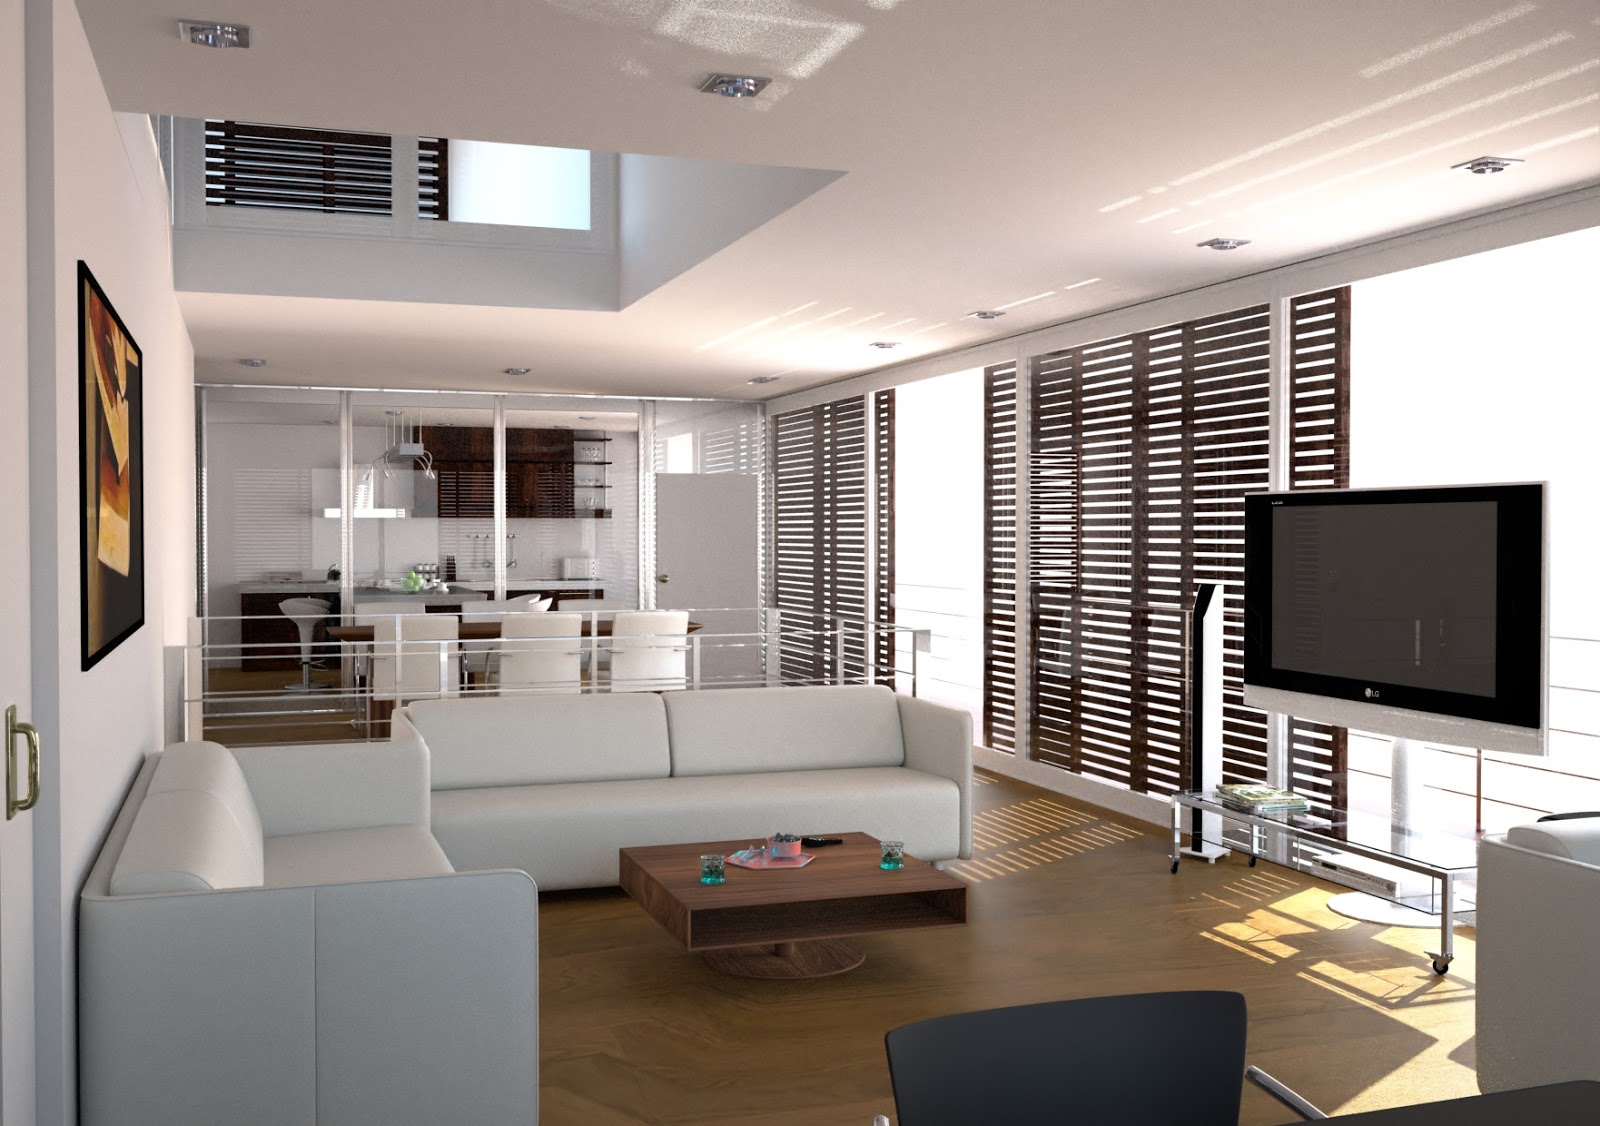 25 Effective Modern Interior Design Ideas - The WoW Style